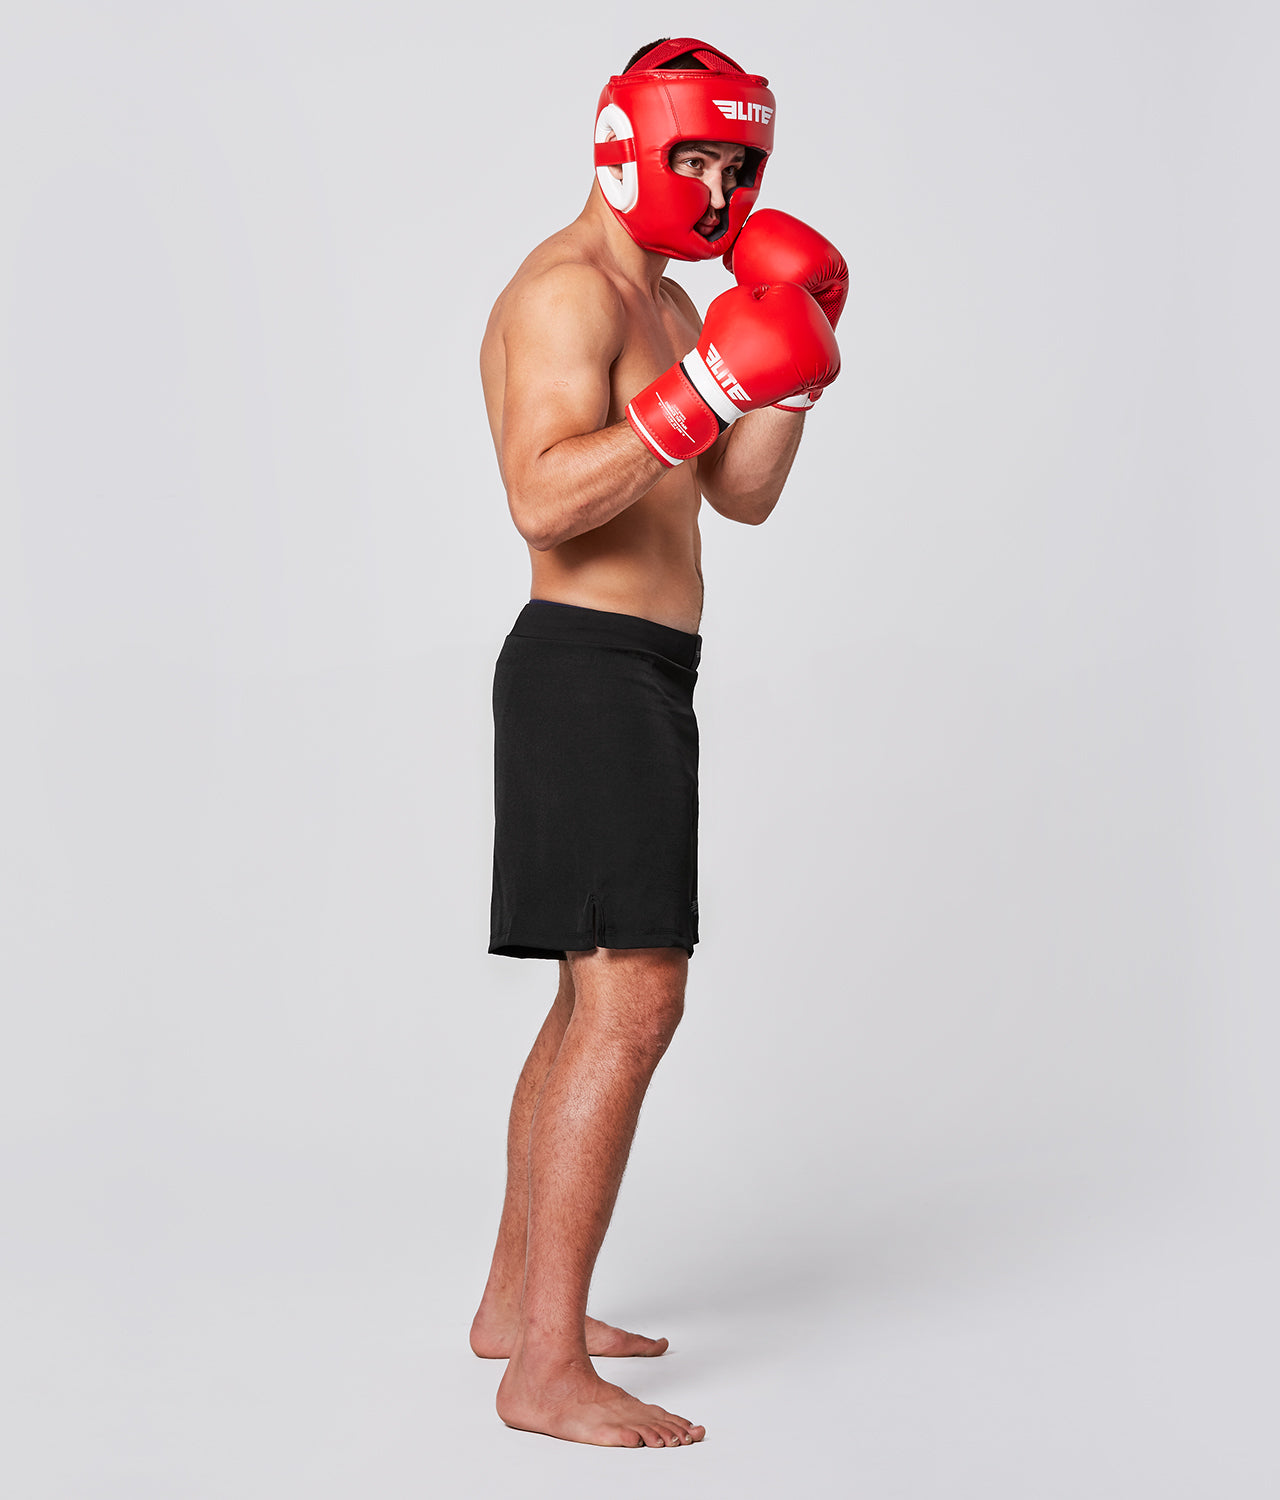 Elite Sports Adults' Essential Red MMA Headgear